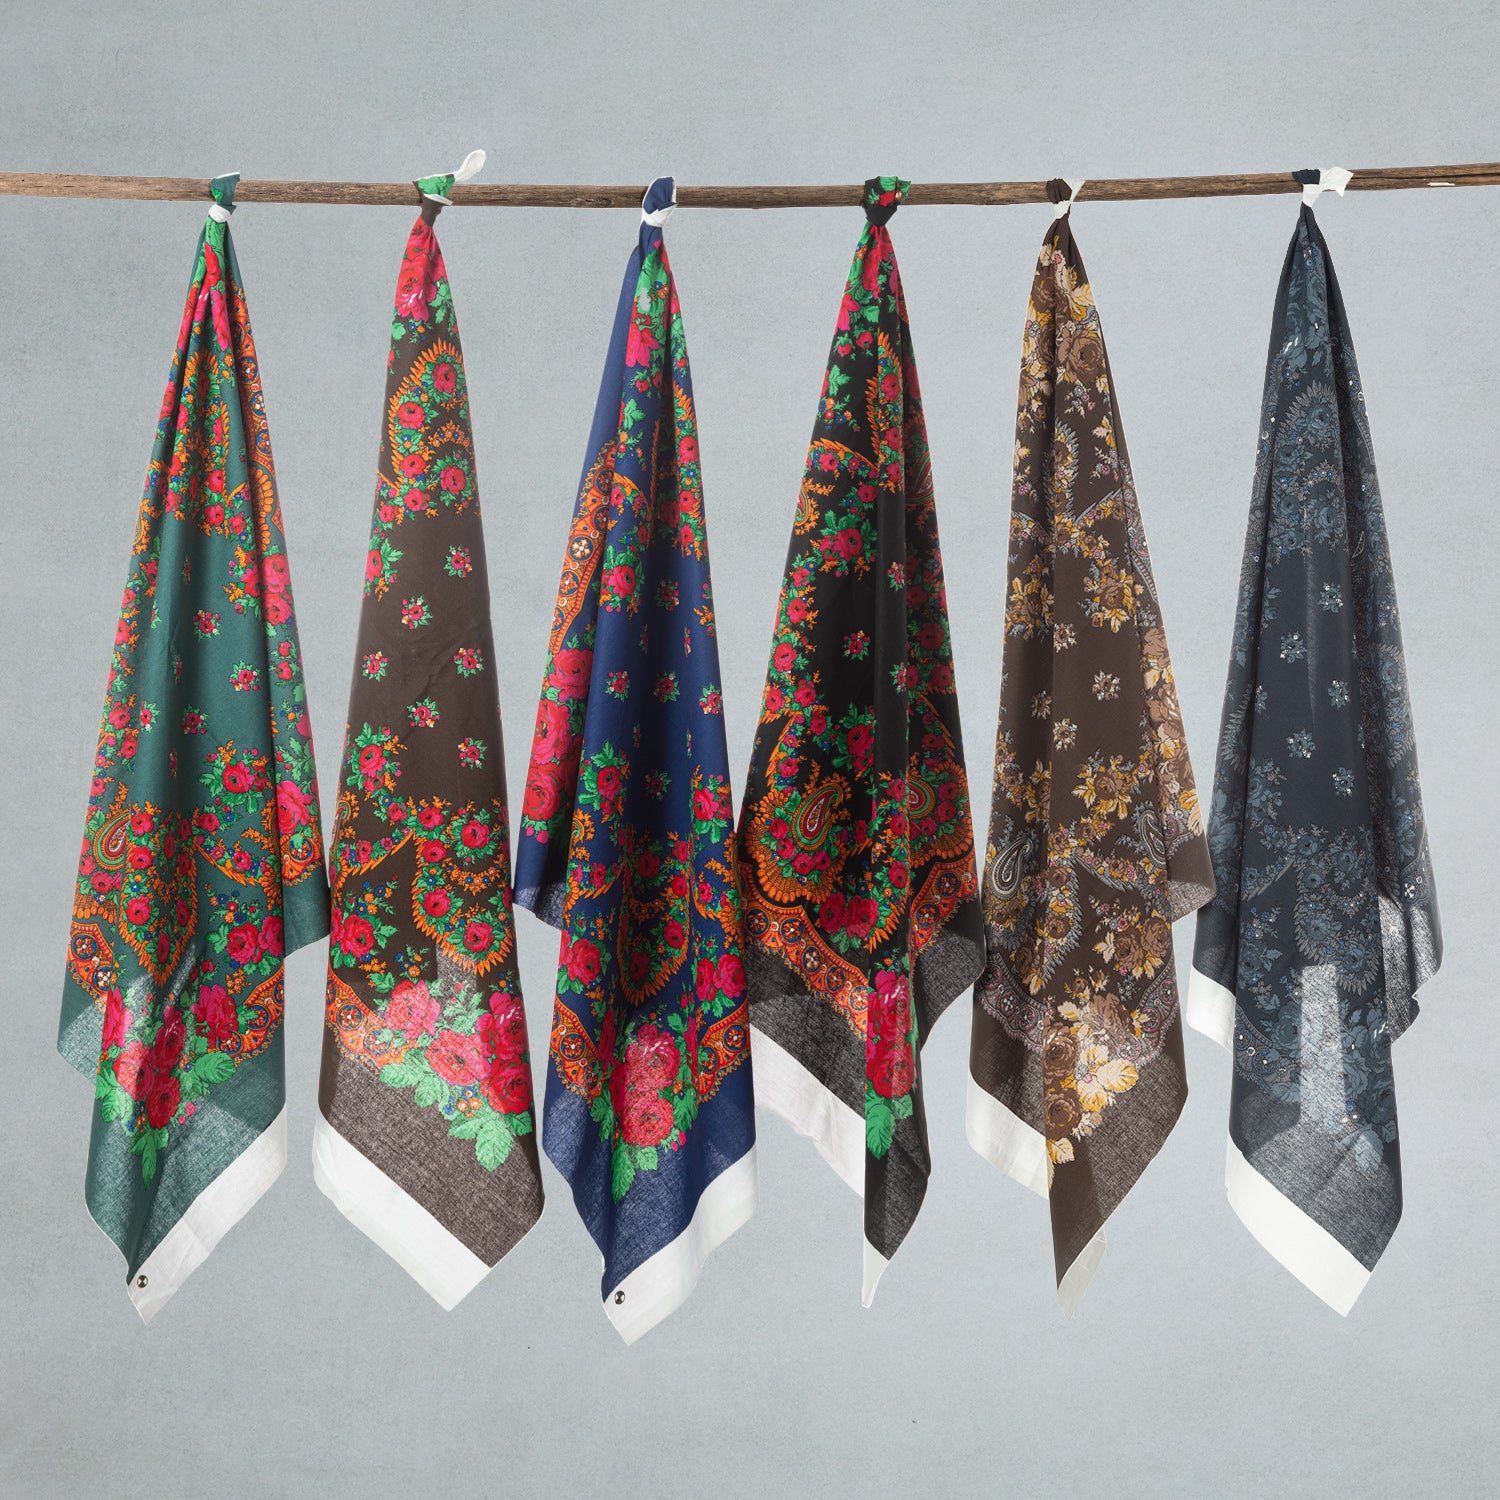 Portuguese folk cotton fabric for shawls